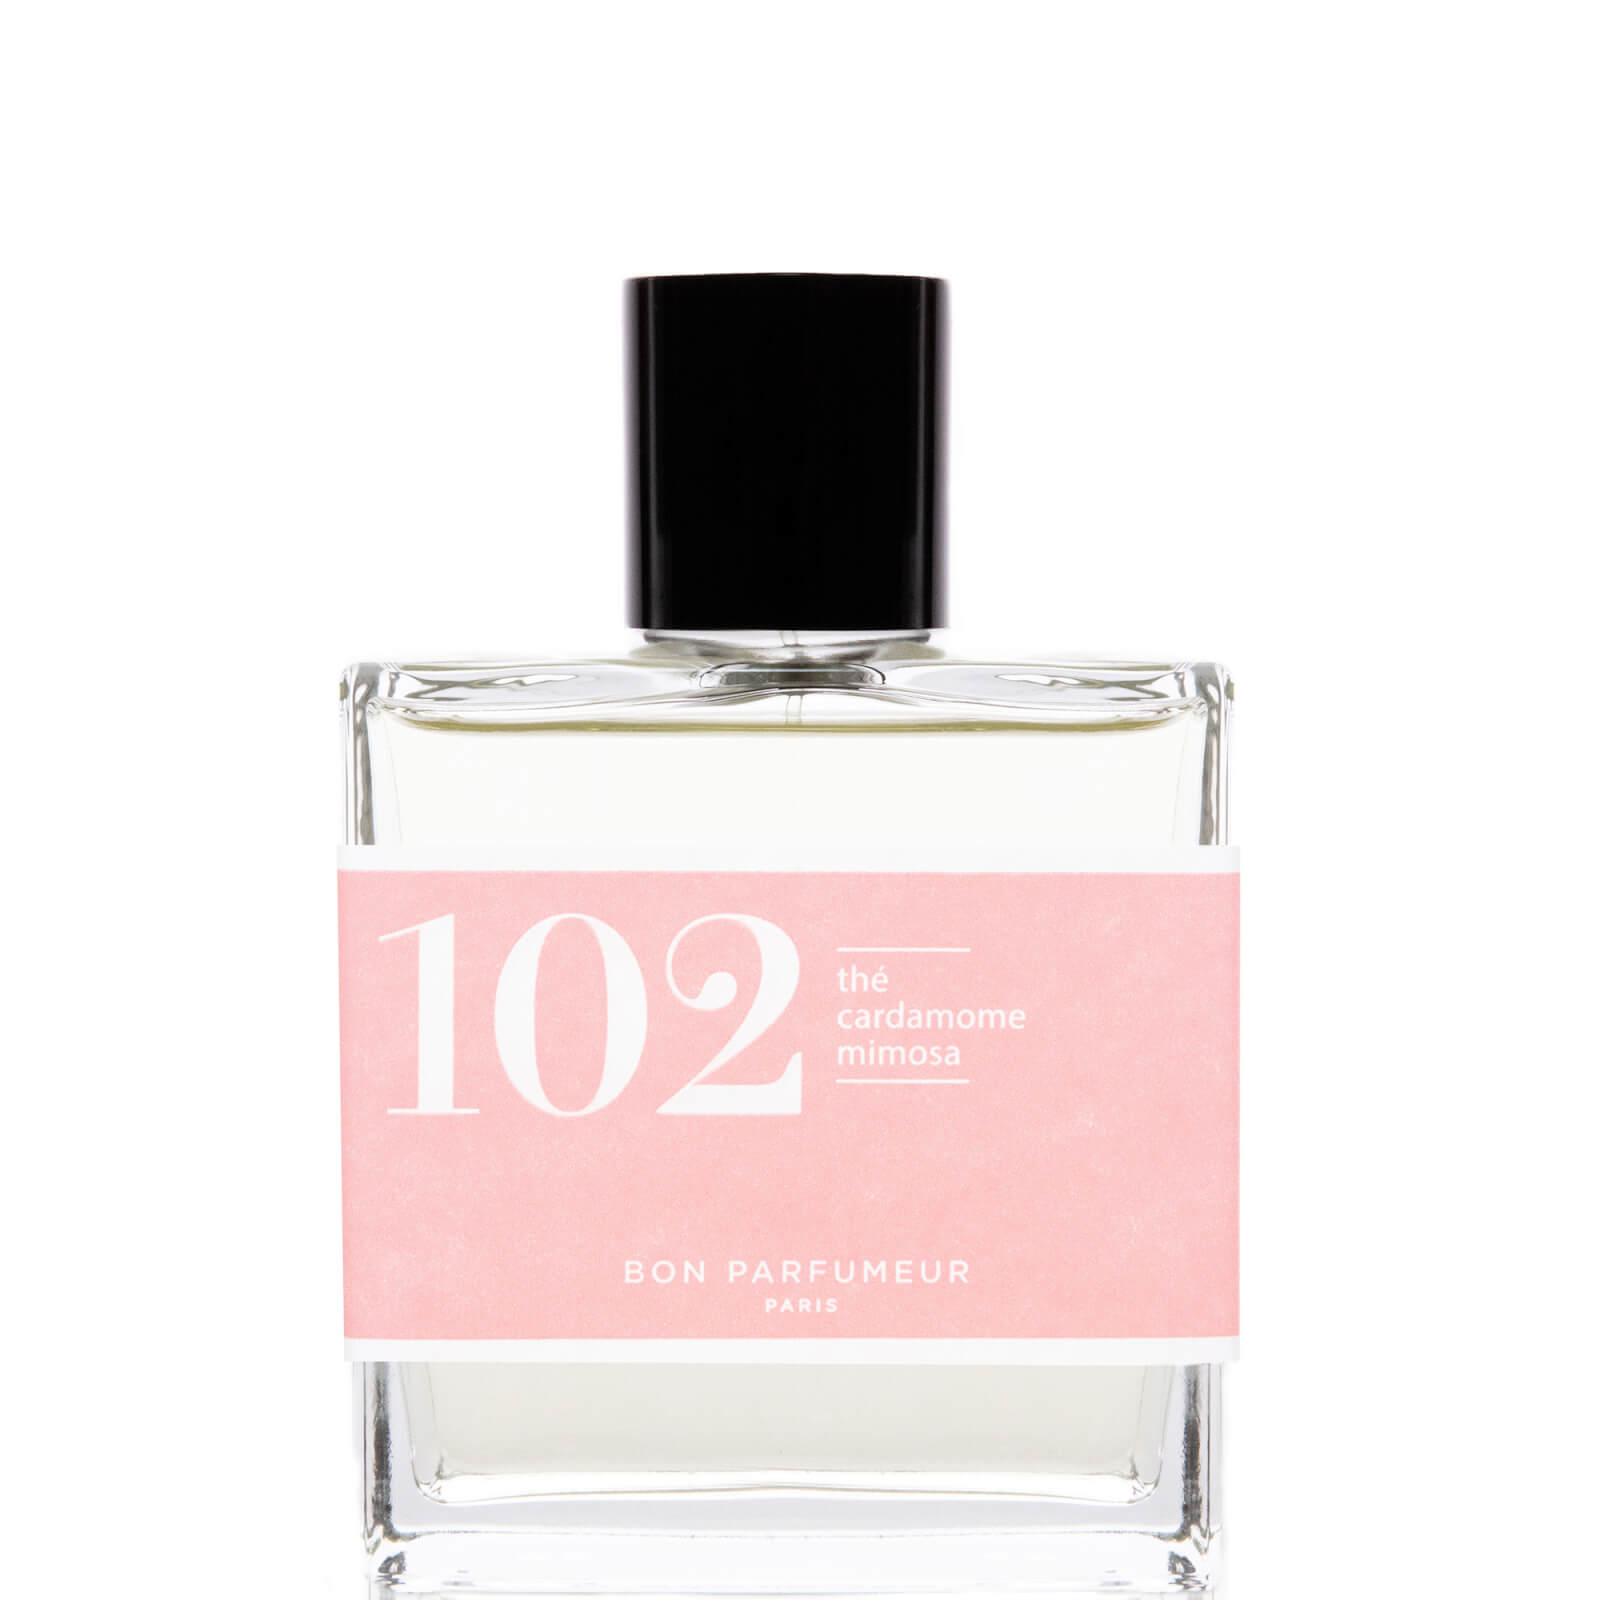 Bon Parfumeur 102 Thee Kardemom Mimosa Eau de Parfum - 100ml